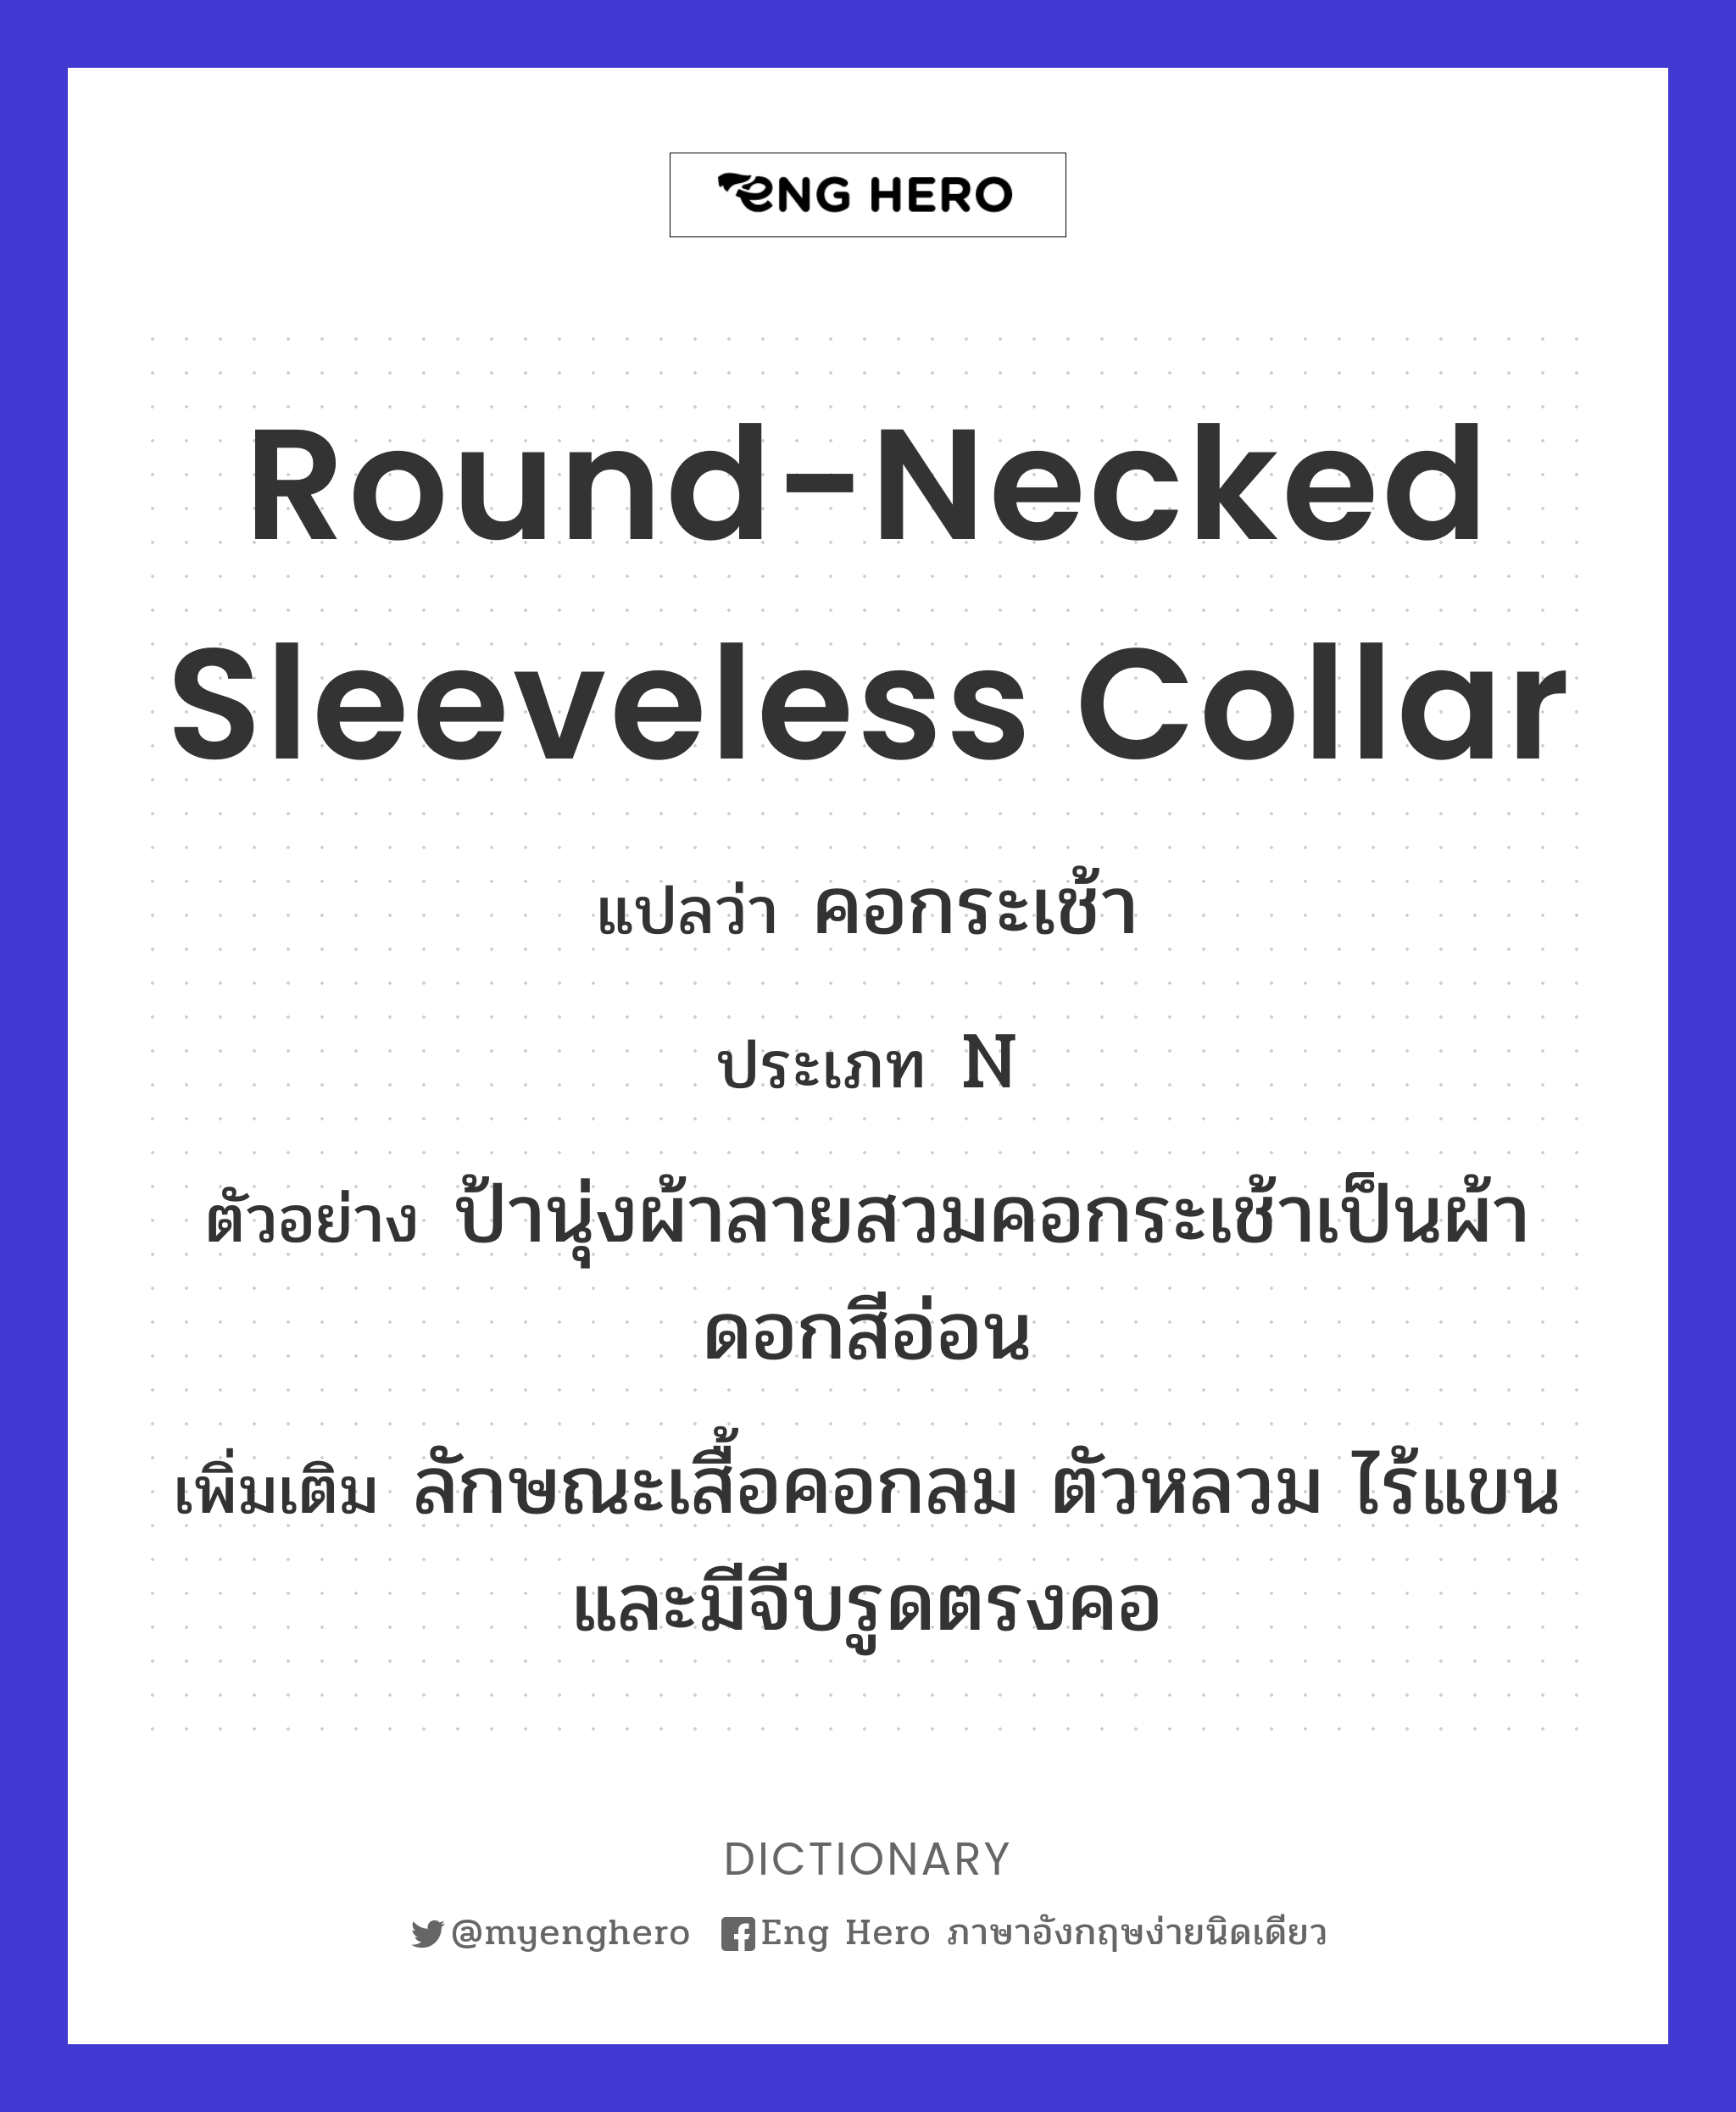 round-necked sleeveless collar